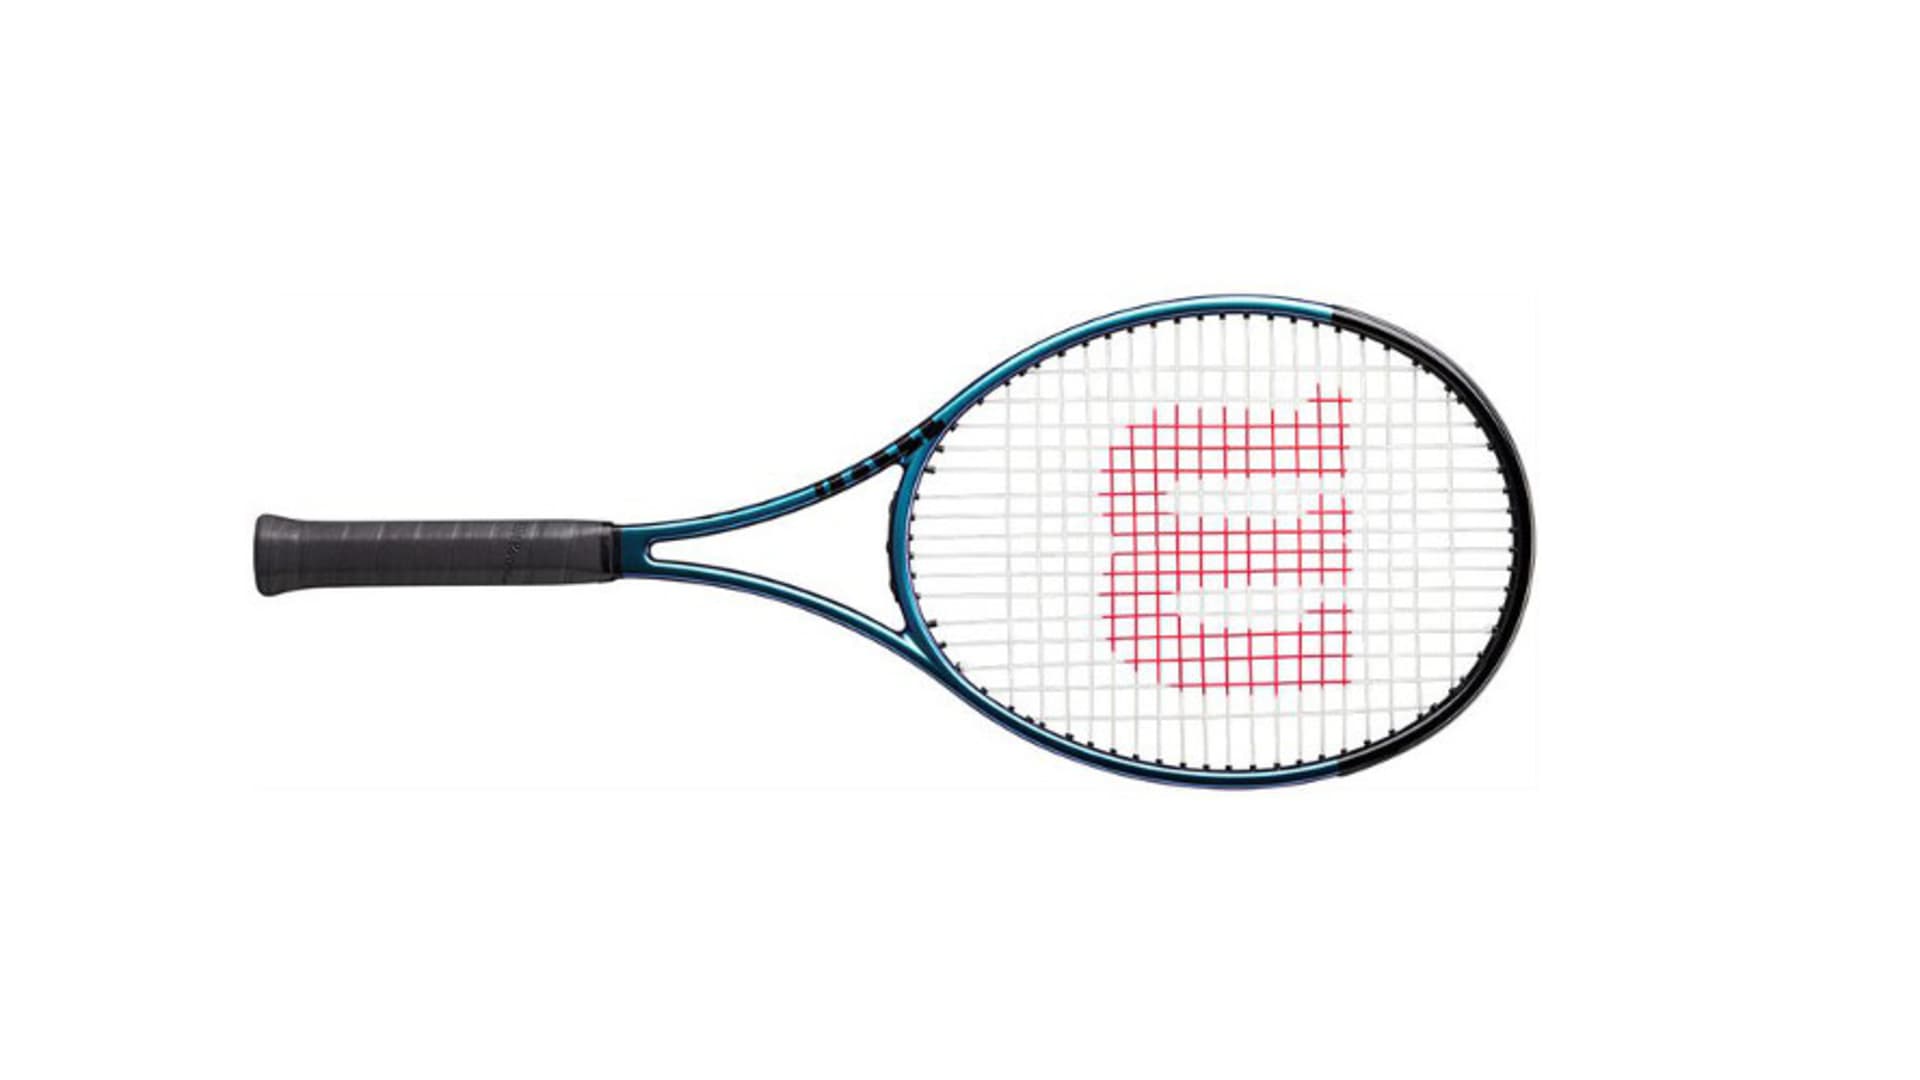 Racquet Review: Wilson Ultra Pro v4